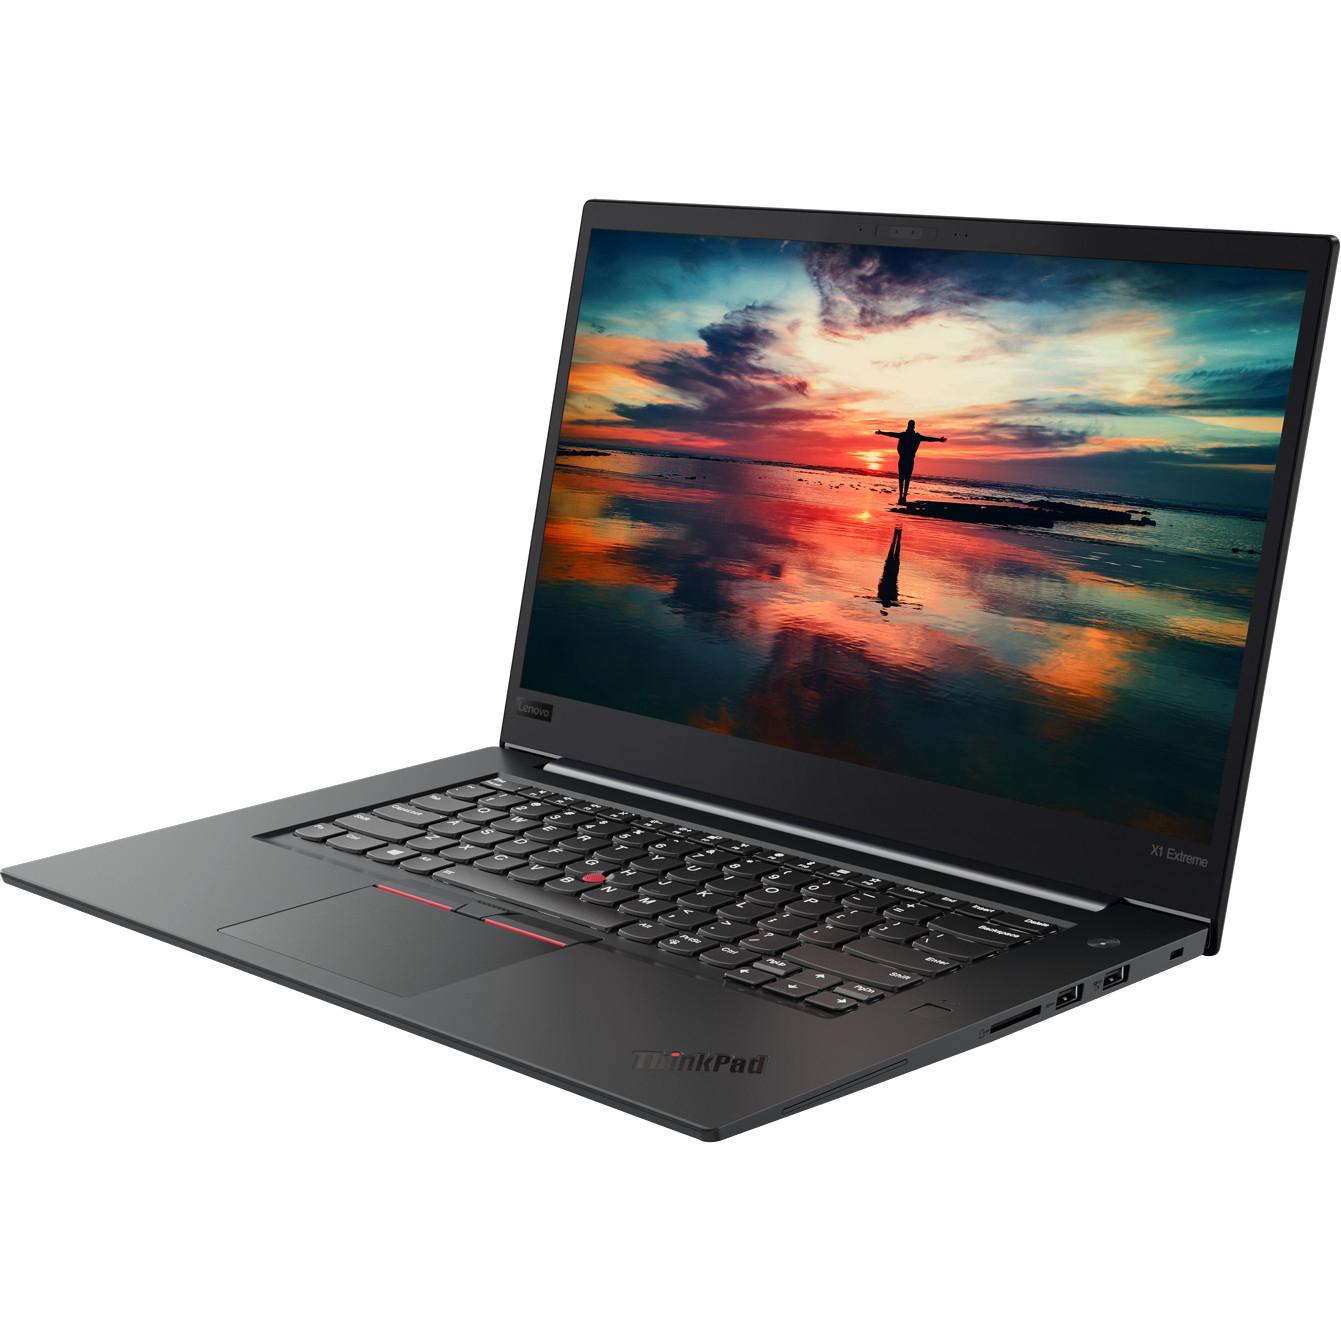 Lenovo ThinkPad X13 Gen 1 AMD Ryzen 7 16GB Notebook Laptop for $916.85 Shipped